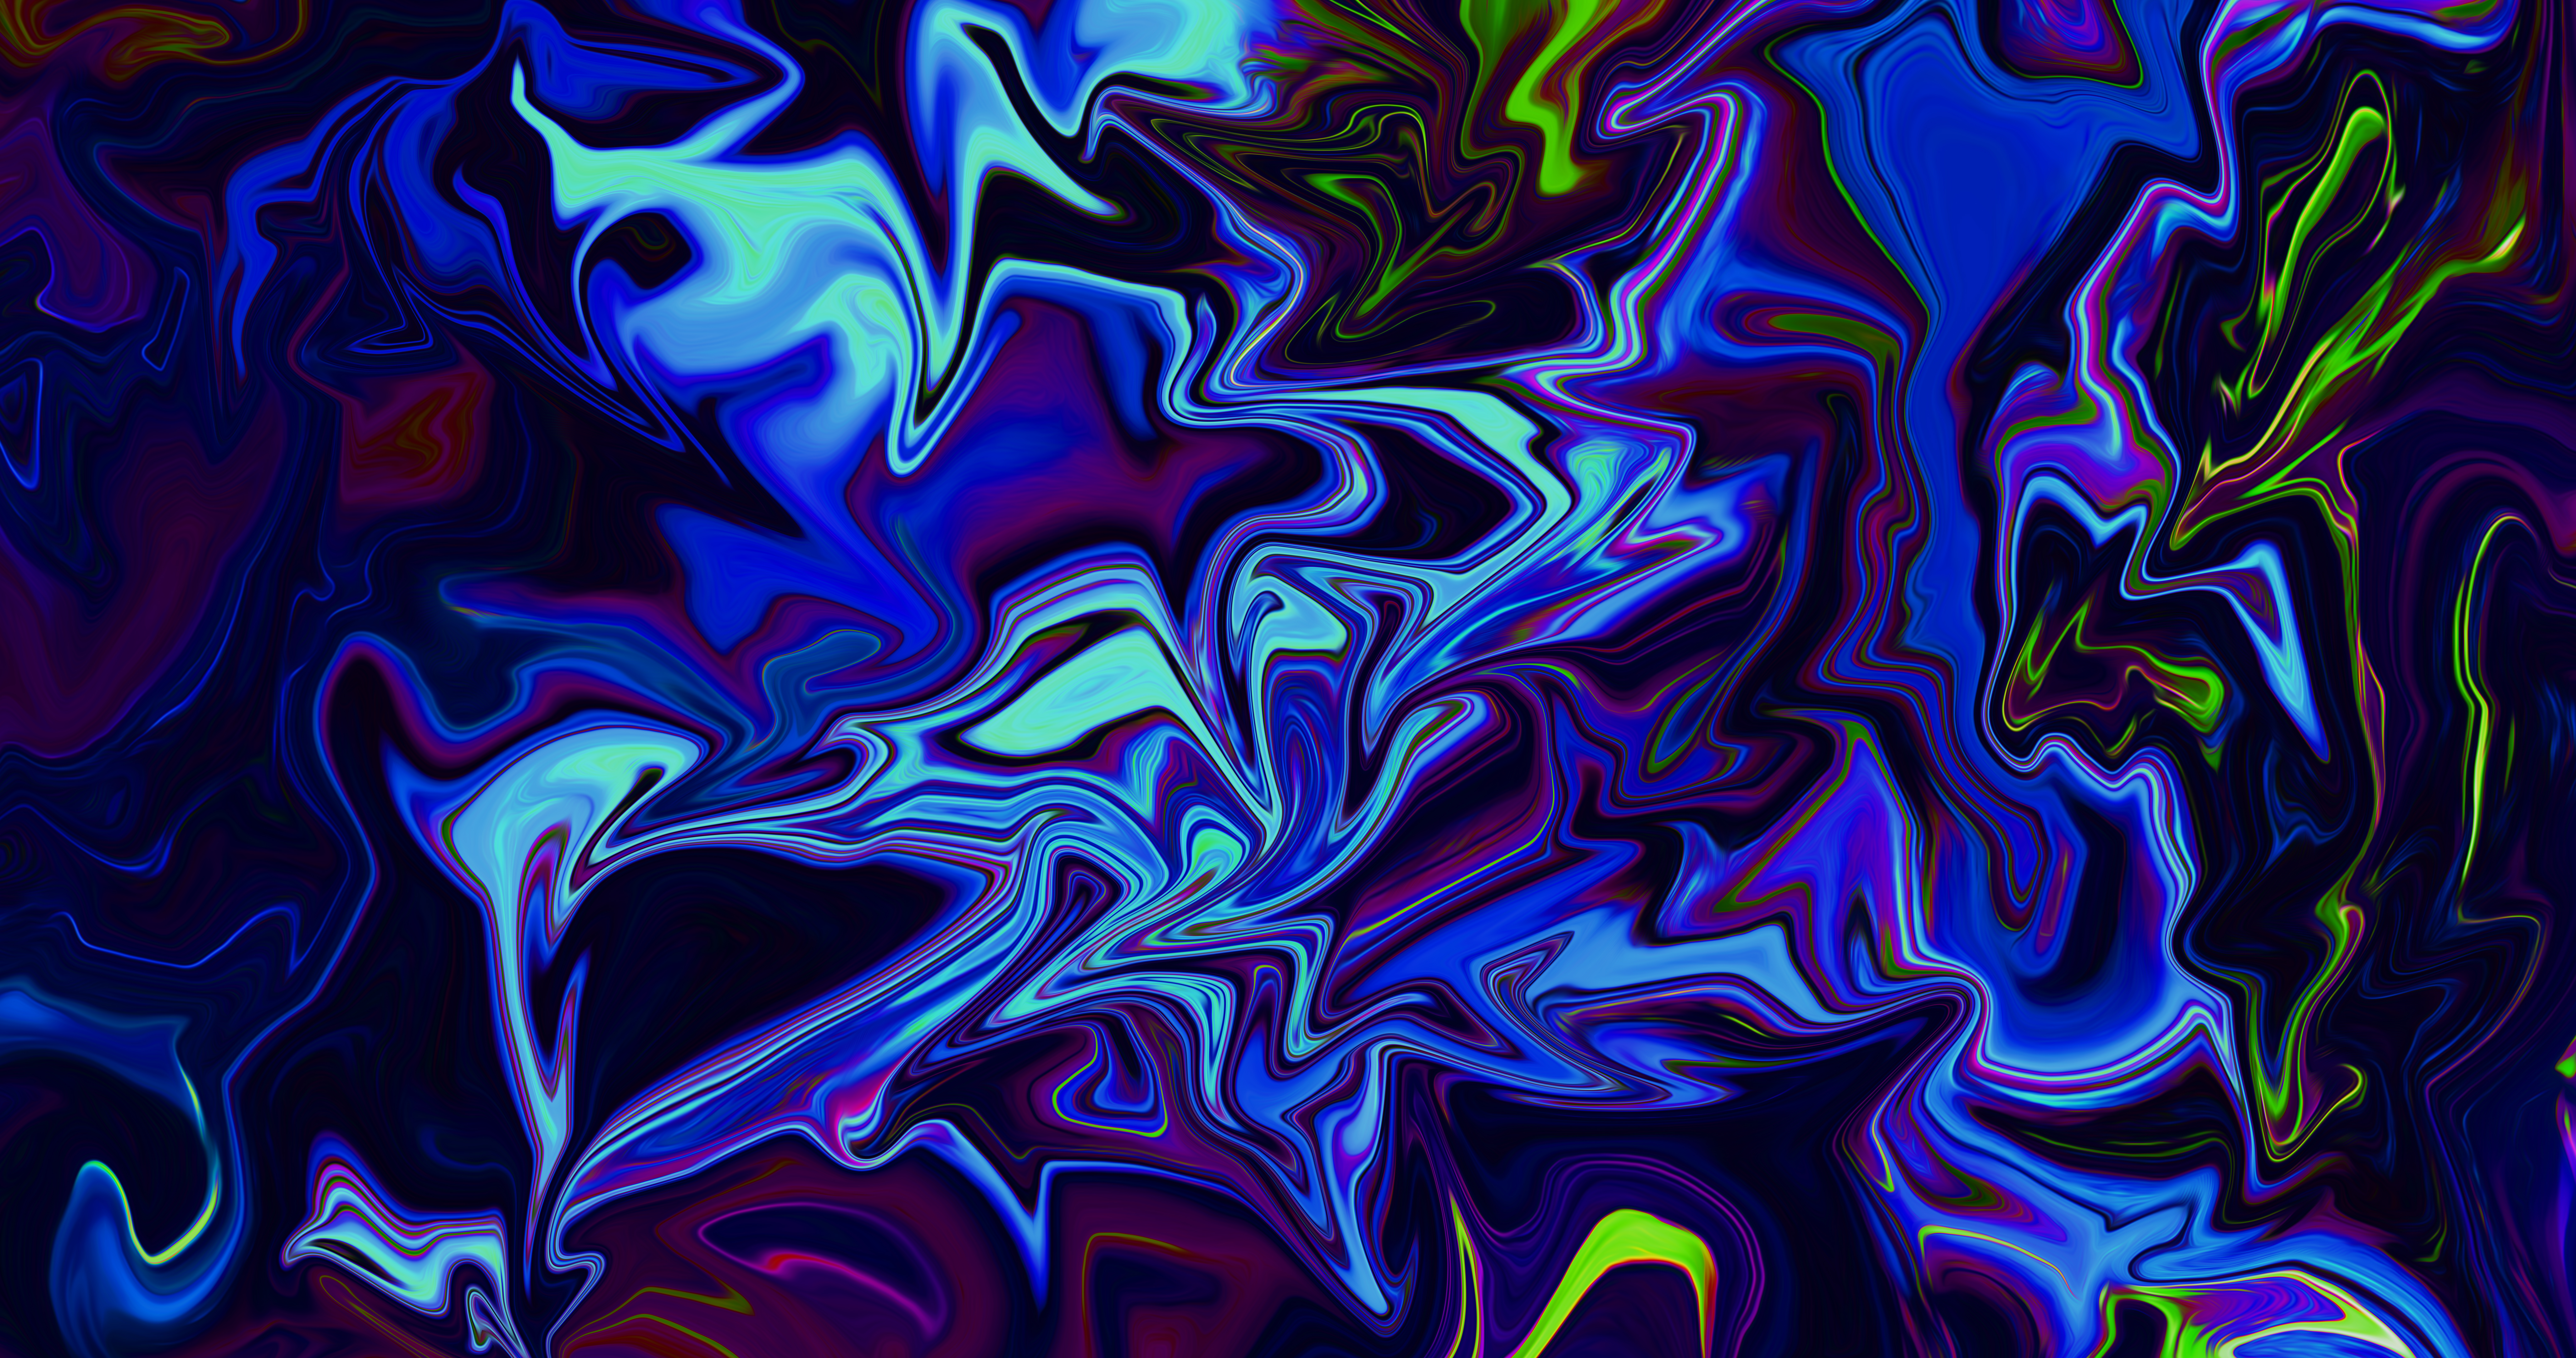 Abstract Shapes Colorful Fluid Liquid Artwork Digital Art Paint Brushes Neon Blue Purple Dark 8 K 8192x4320